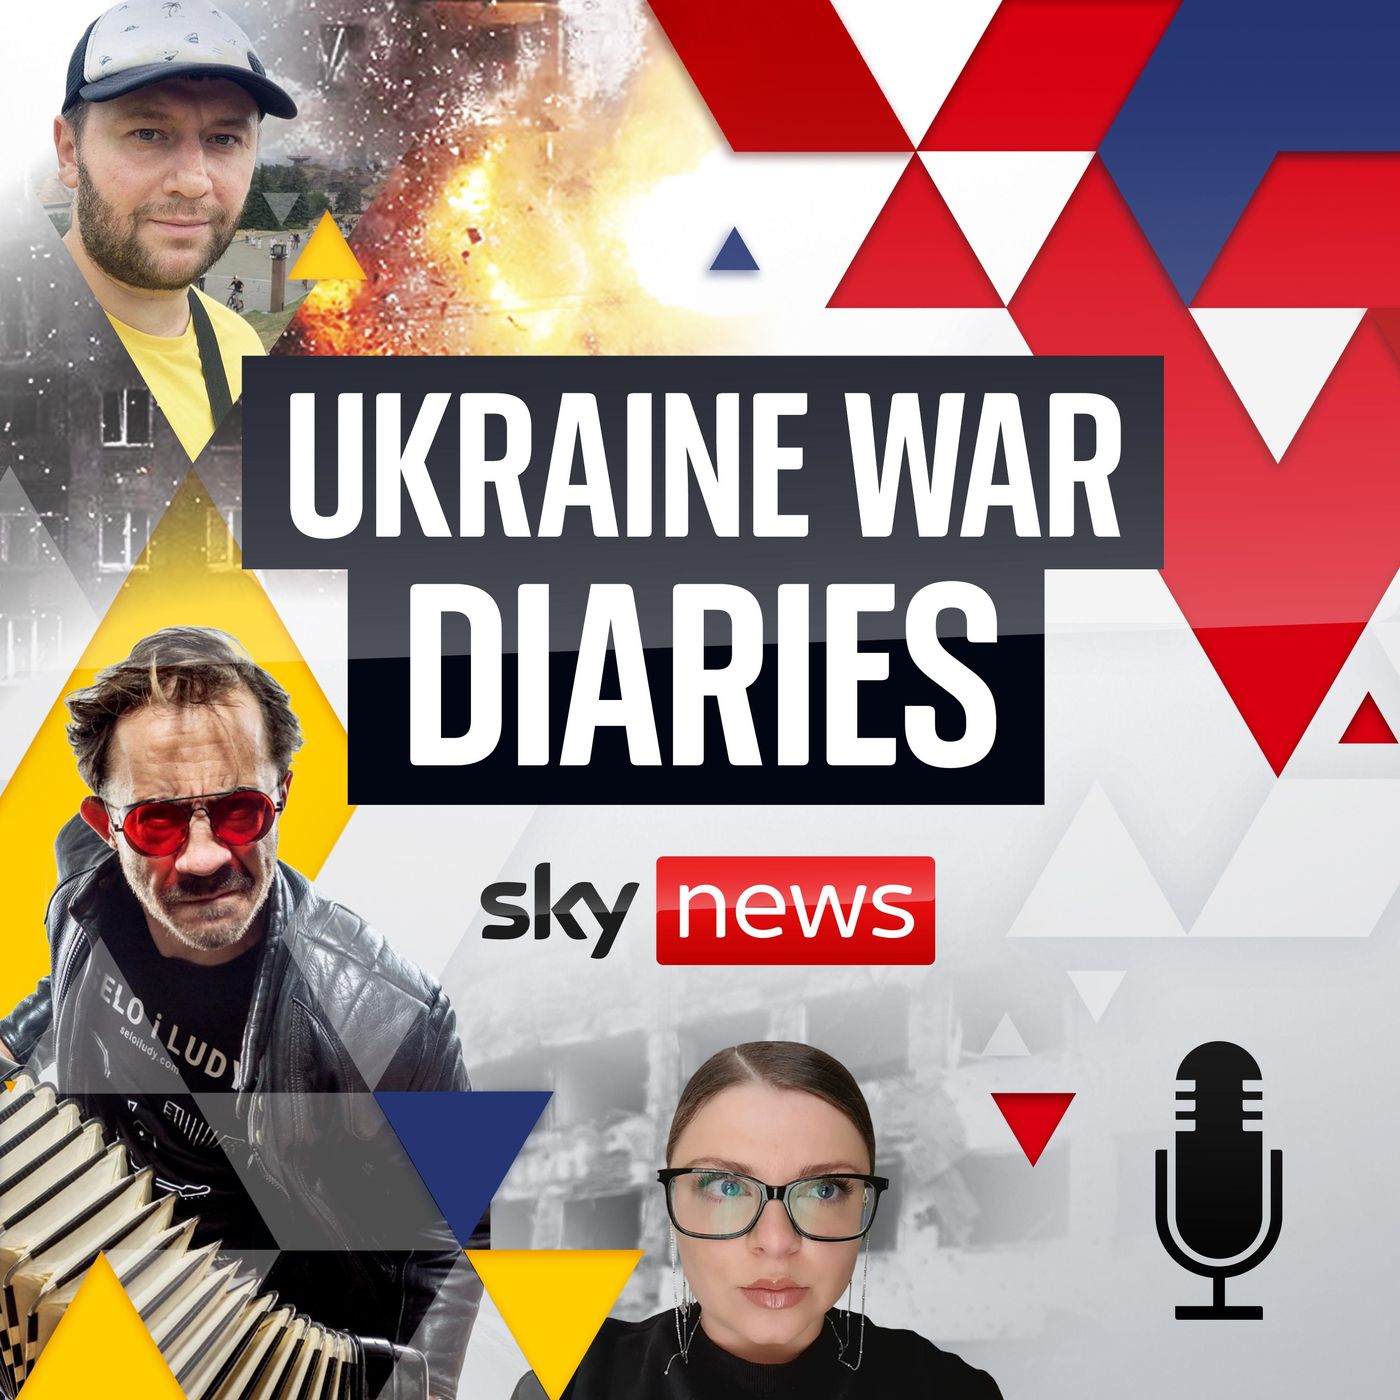 Ukraine War Diaries: WK6 - Cakes, victory & dogs of war (25-29 Apr)